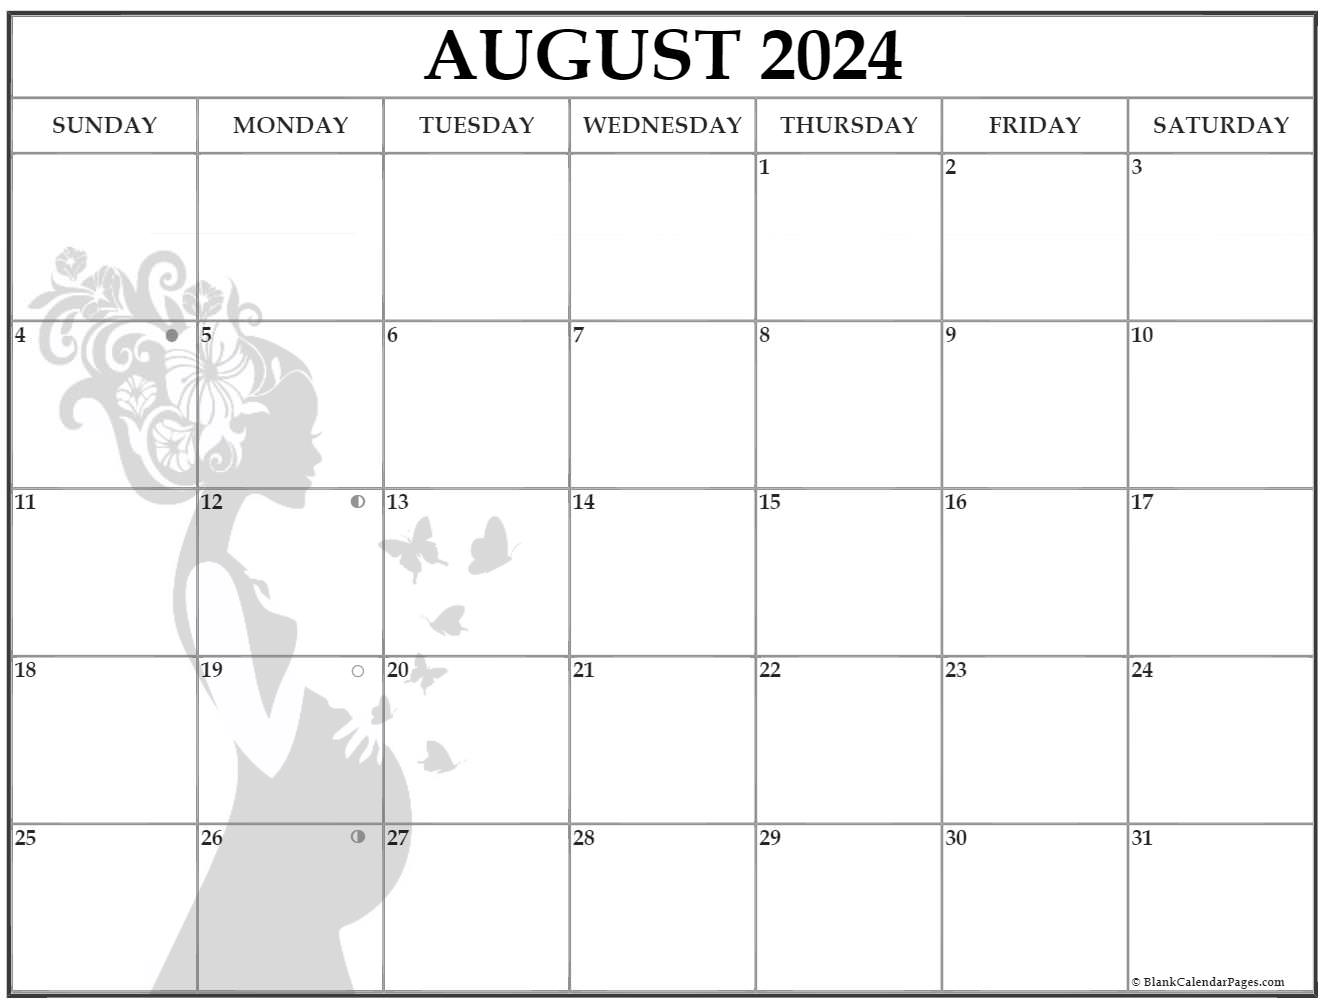 August 2020 Pregnancy Calendar